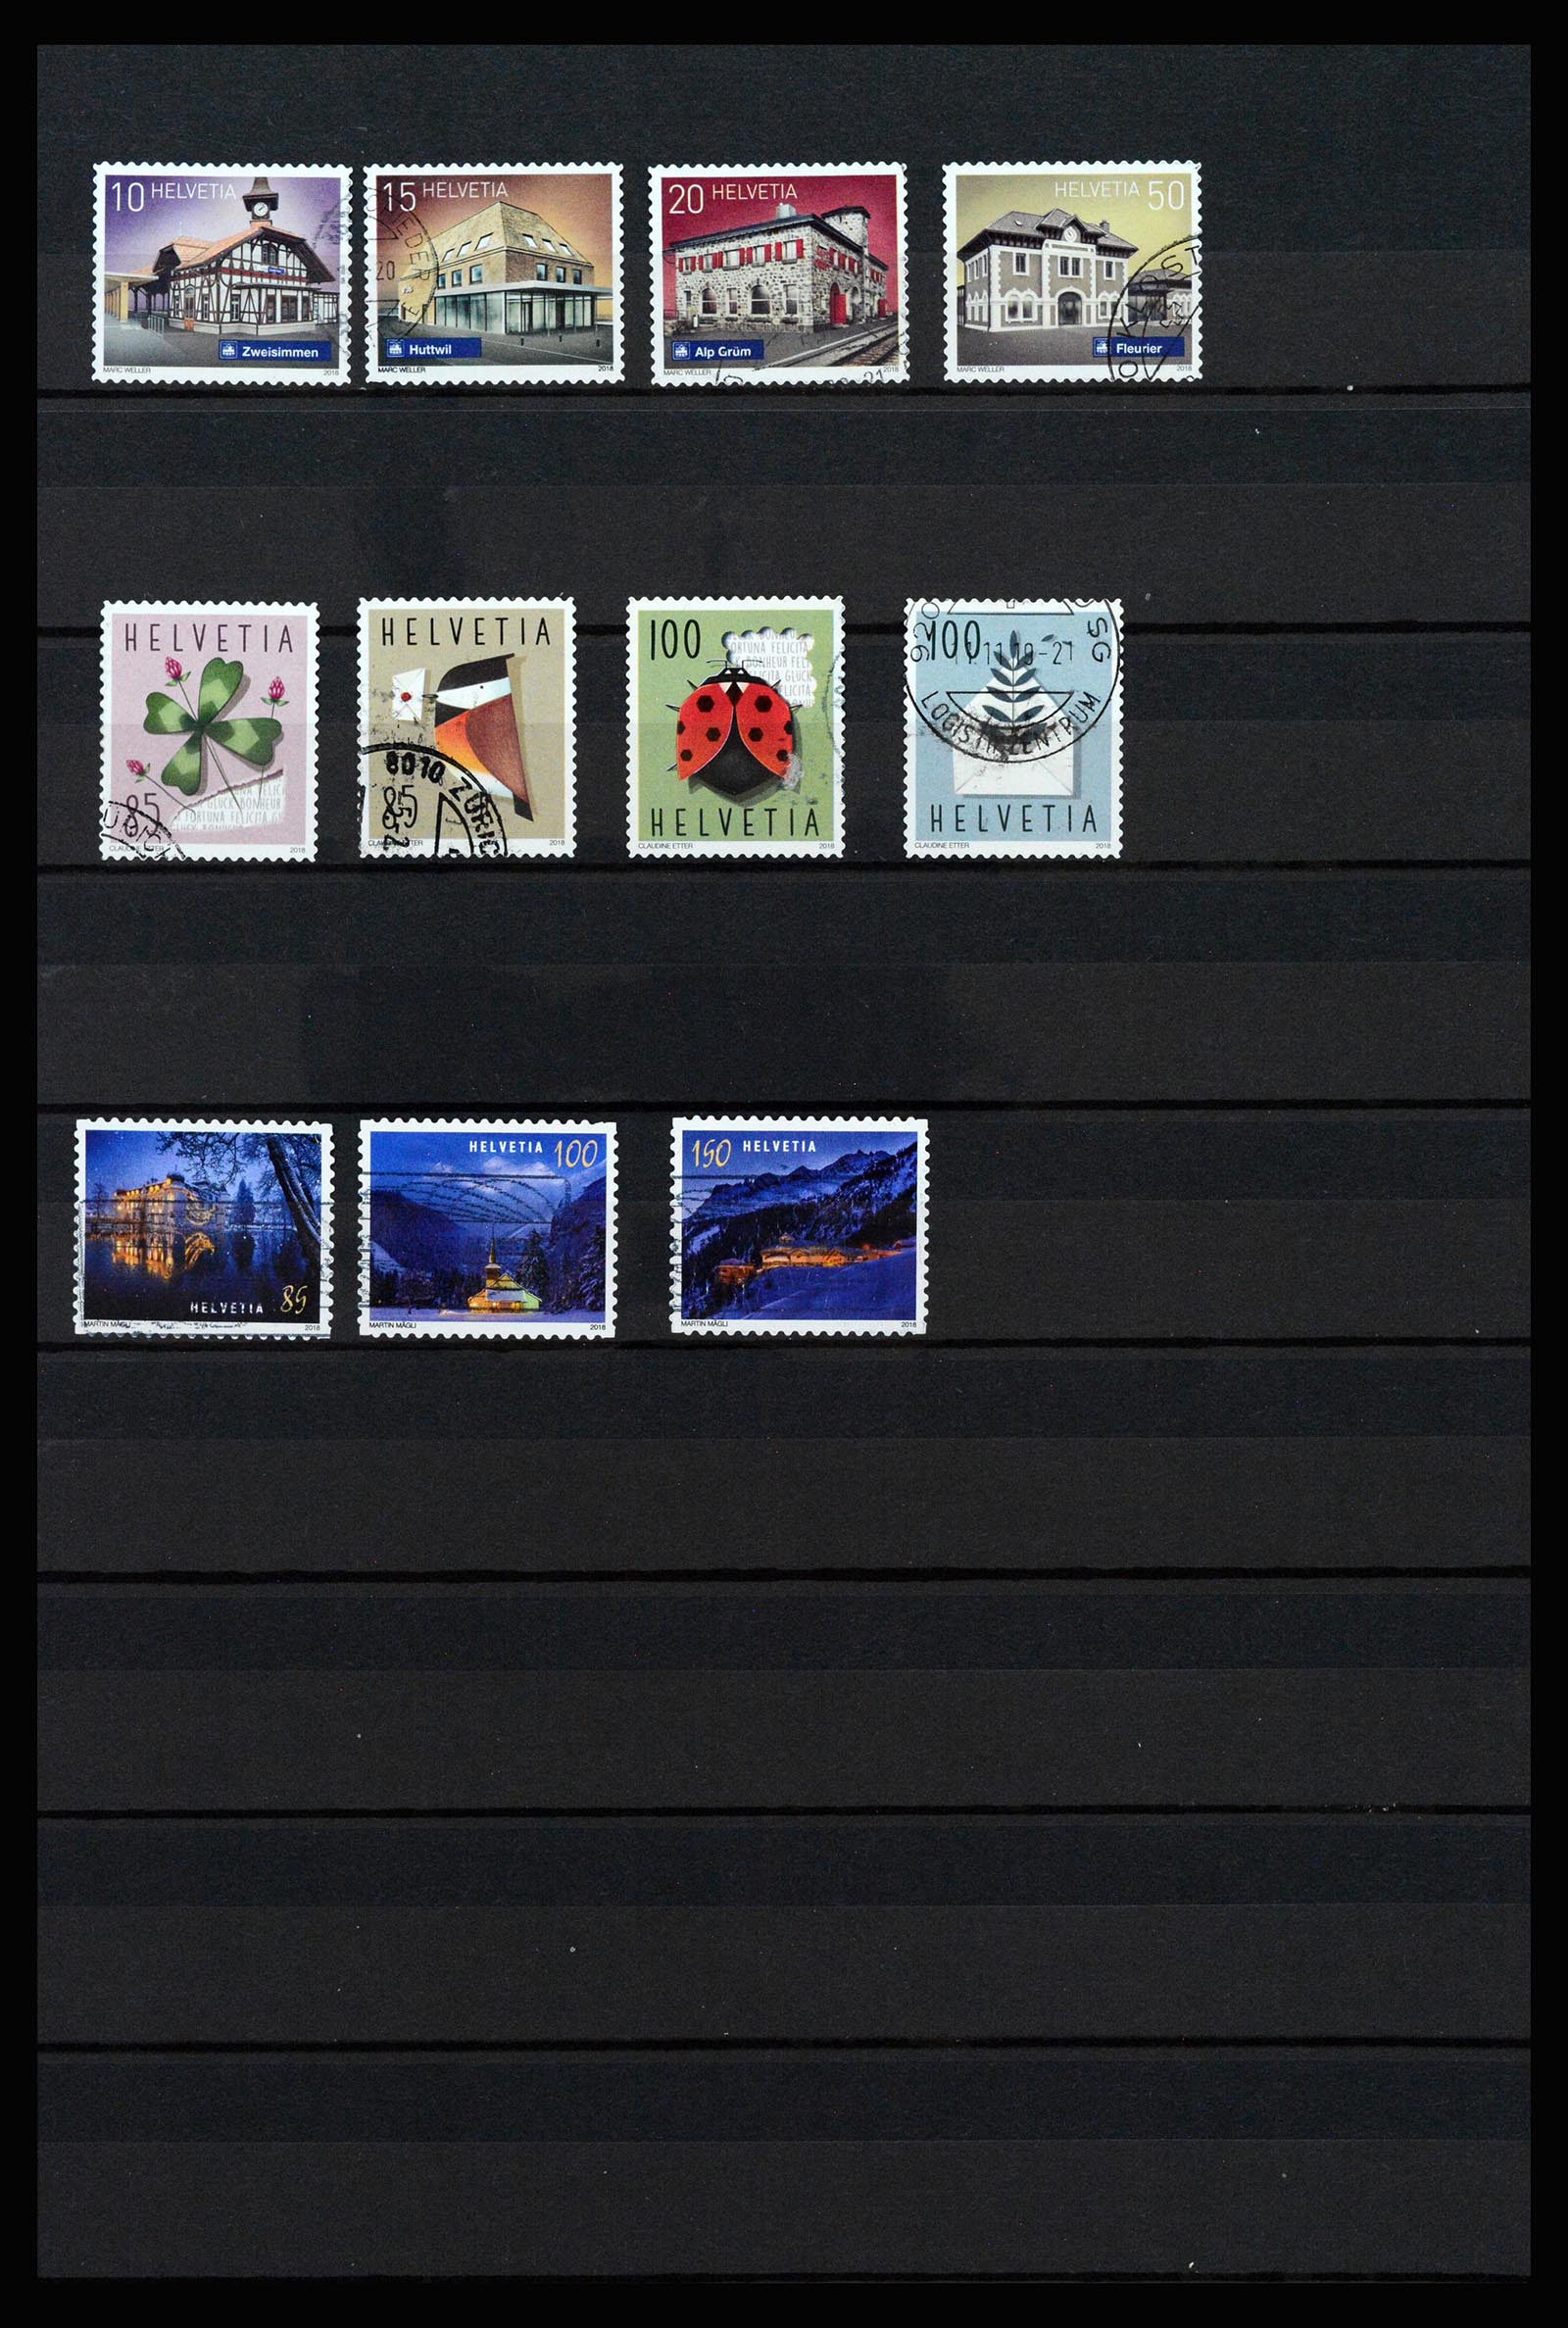 37225 193 - Stamp collection 37225 Switzerland 1854-2020.